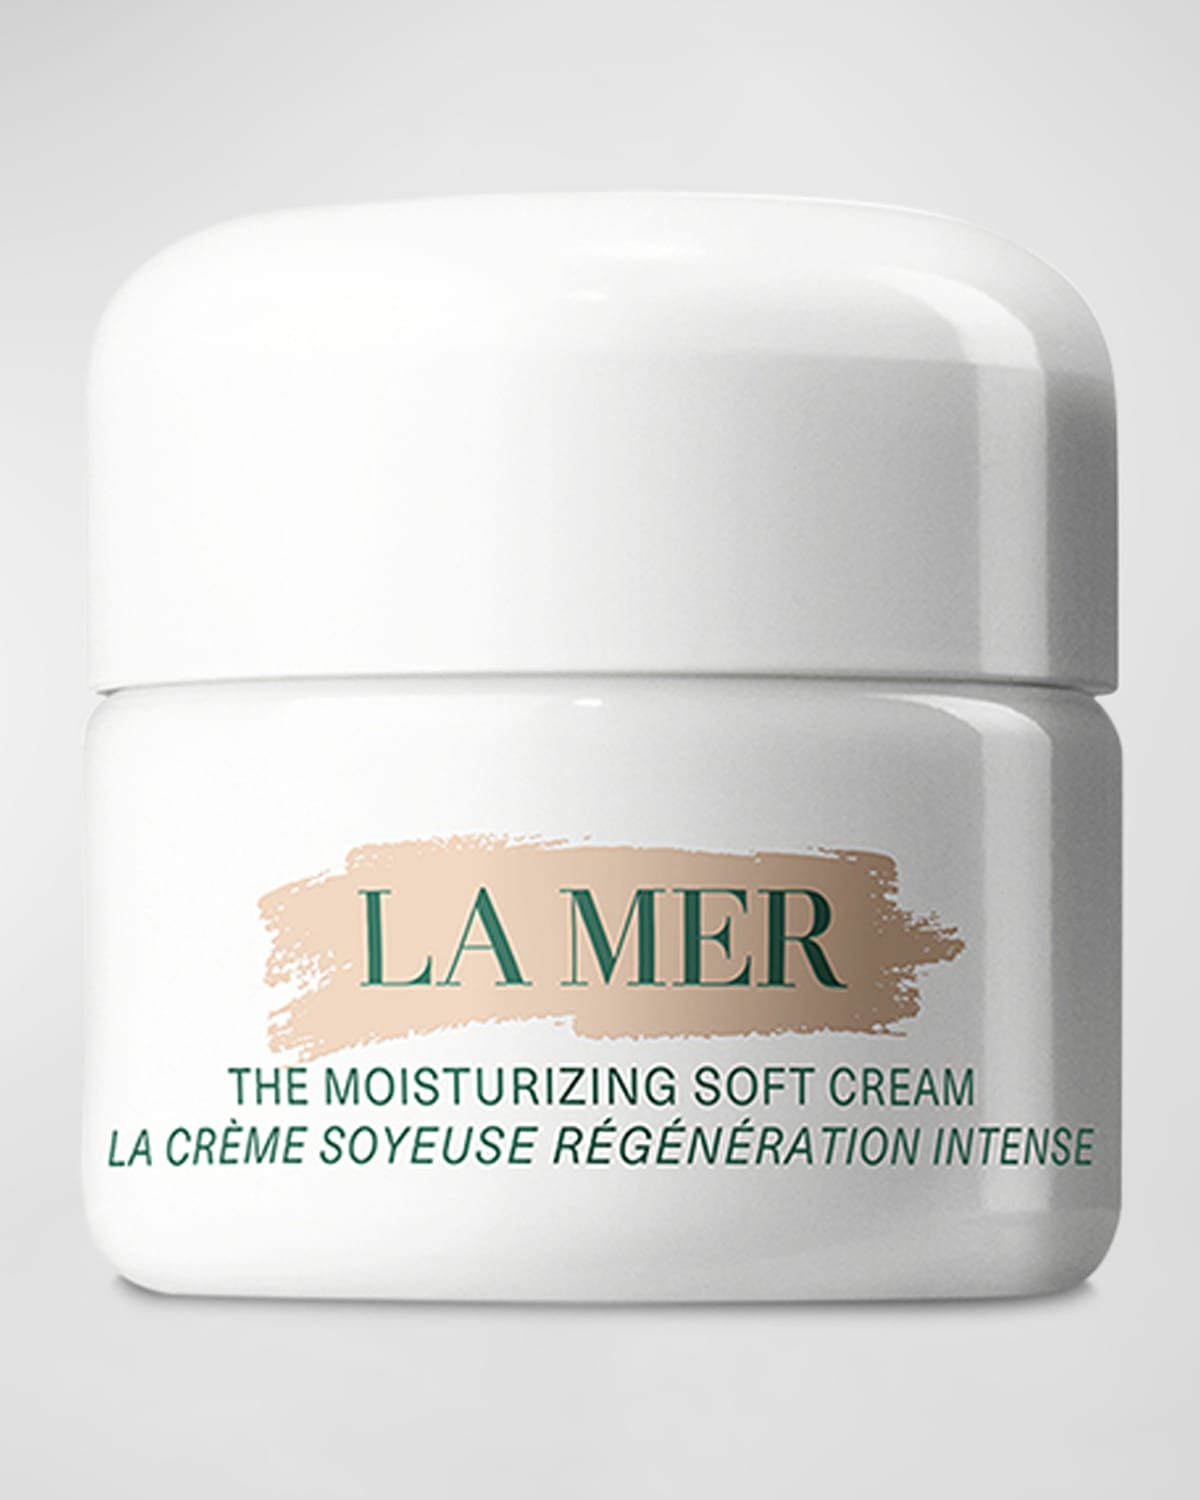 La Mer The Moisturizing Soft Cream, 0.5 oz.